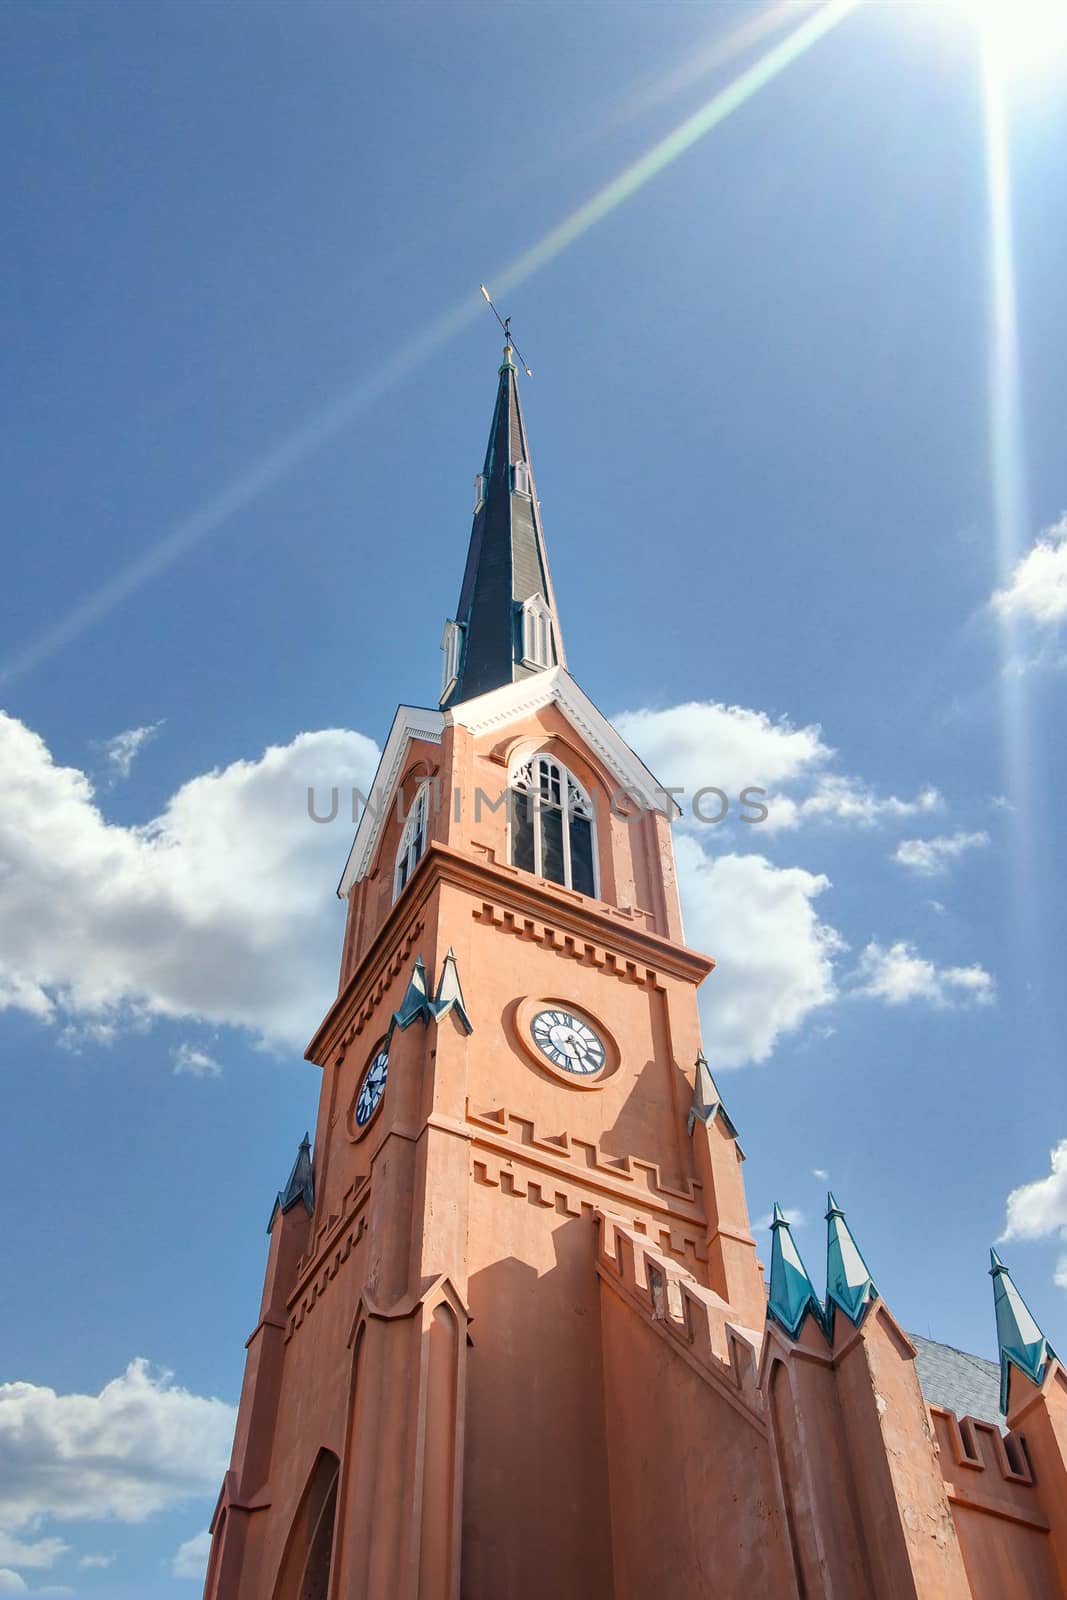 Clock in Steeple of Lutheran Church in South Carolina by dbvirago